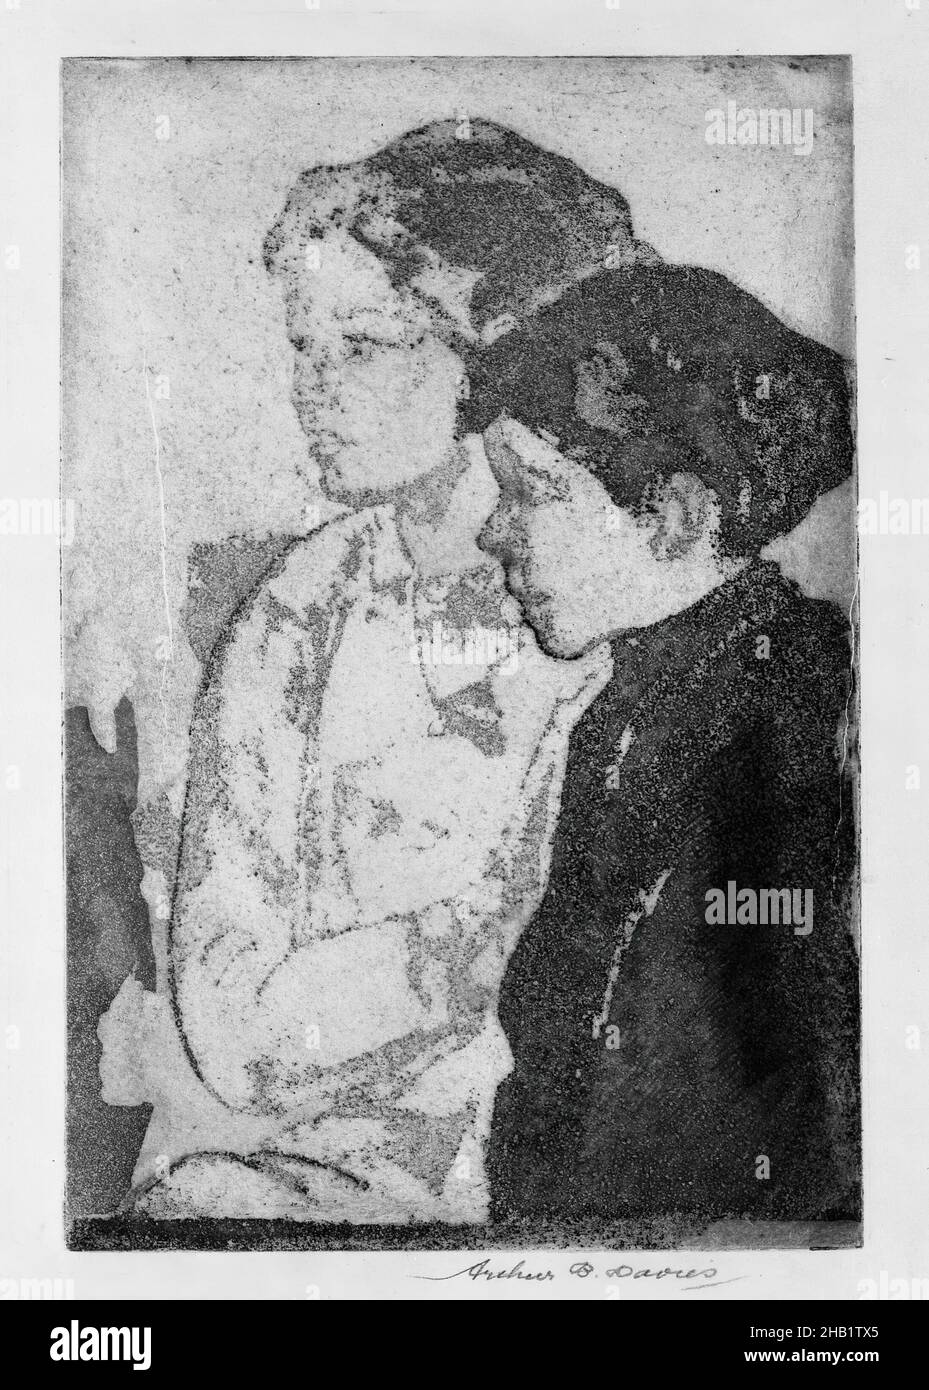 Brothers, Arthur B. Davies, American, 1862-1928, Aquatint on cream-colored machine-made Japan paper, 1917, Sheet: 11 15/16 x 8 9/16 in., 30.3 x 21.7 cm, figures Stock Photo